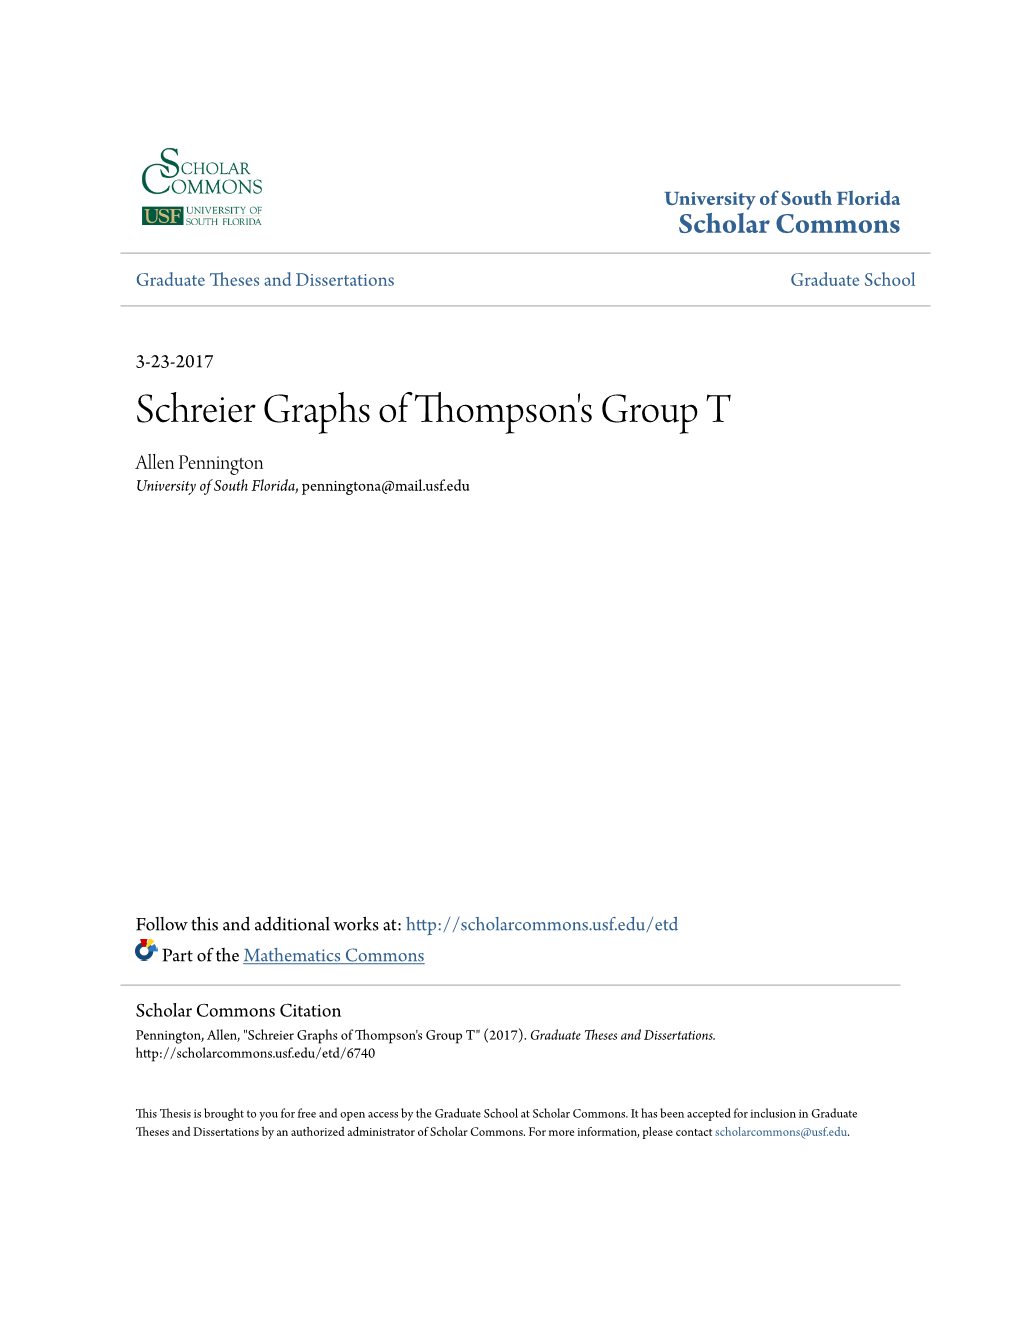 Schreier Graphs of Thompson's Group T Allen Pennington University of South Florida, Penningtona@Mail.Usf.Edu